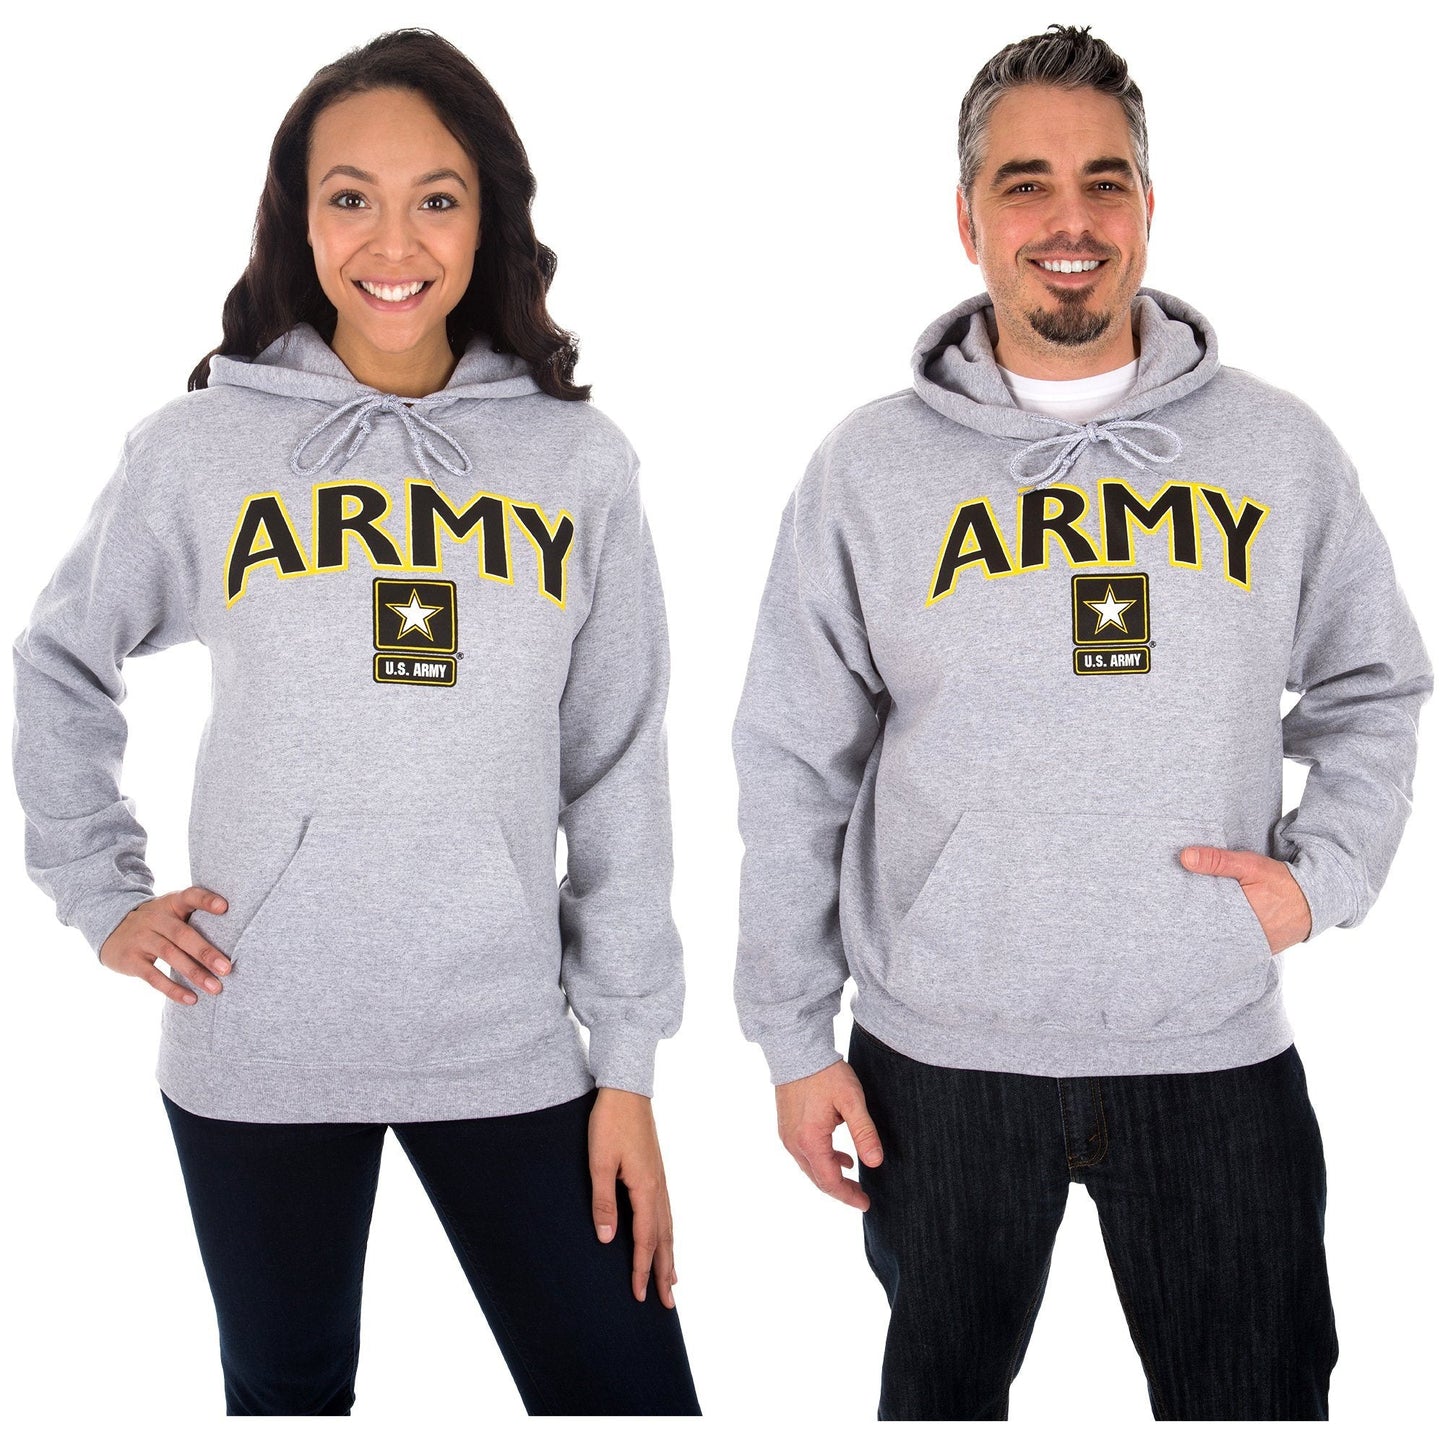 U.S. Army Hooded Sweatshirt